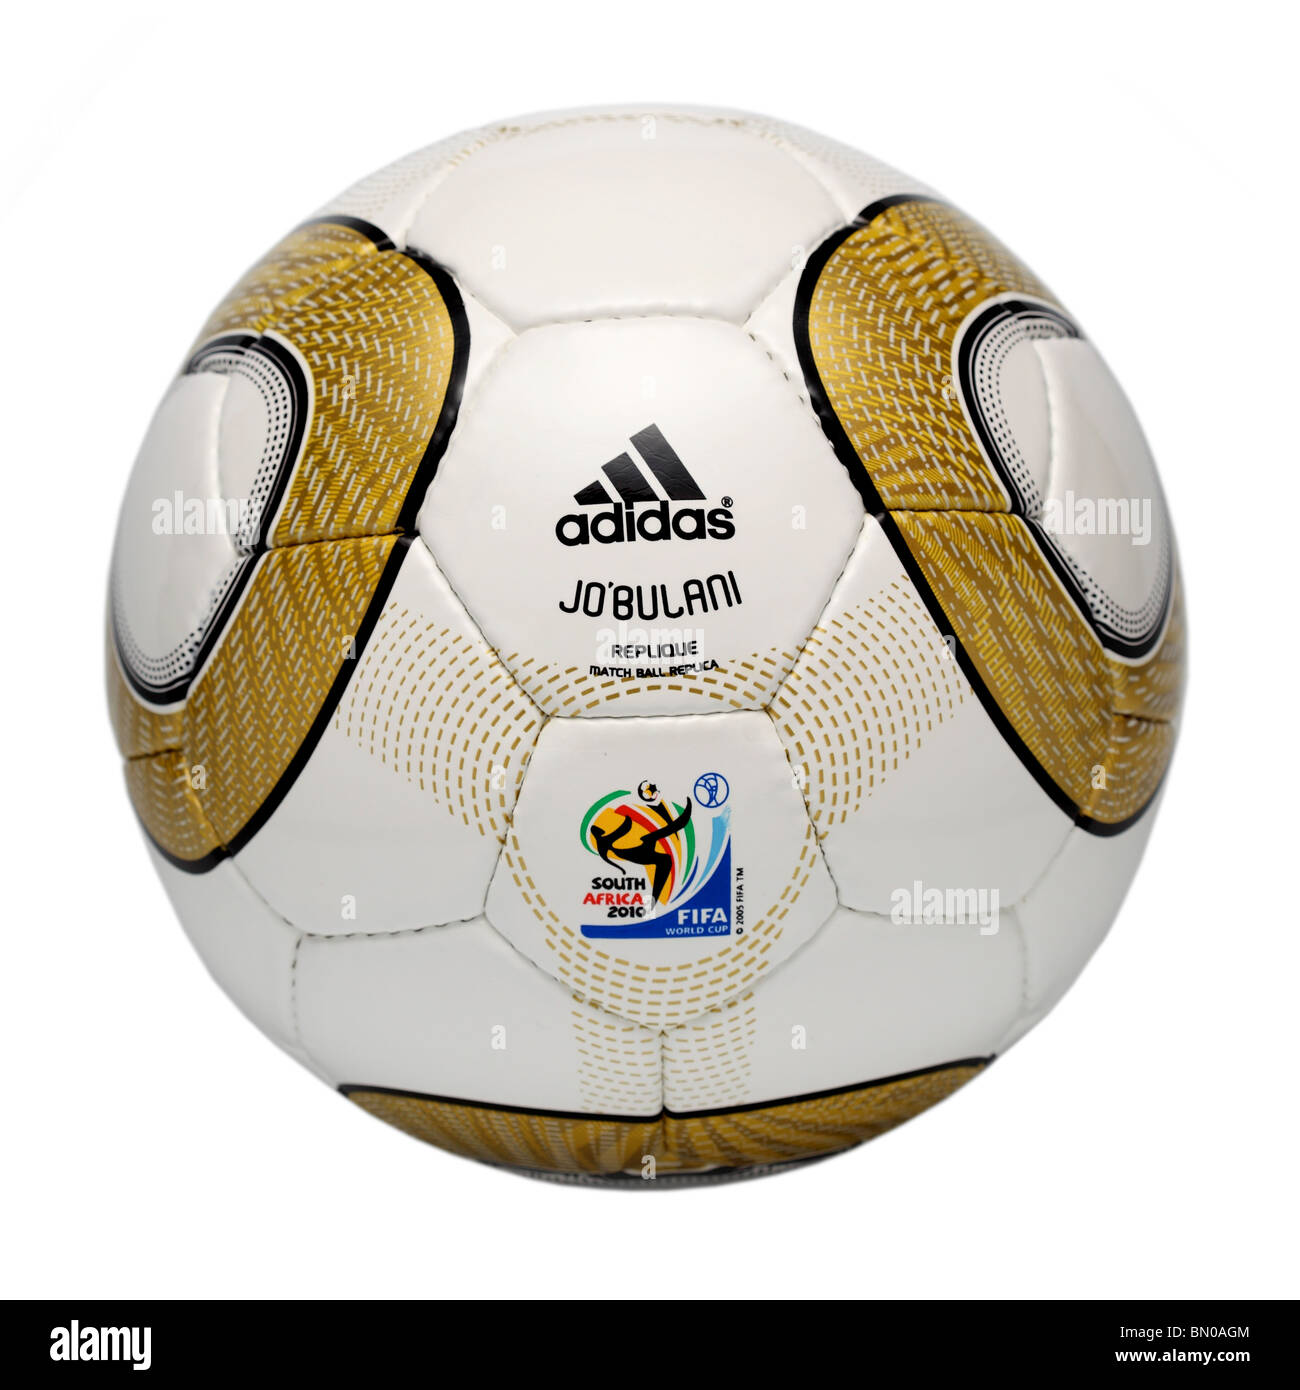 Adidas Jo'Buljani replique ball replica world cup South Africa 2010 FIFA  Stock Photo - Alamy